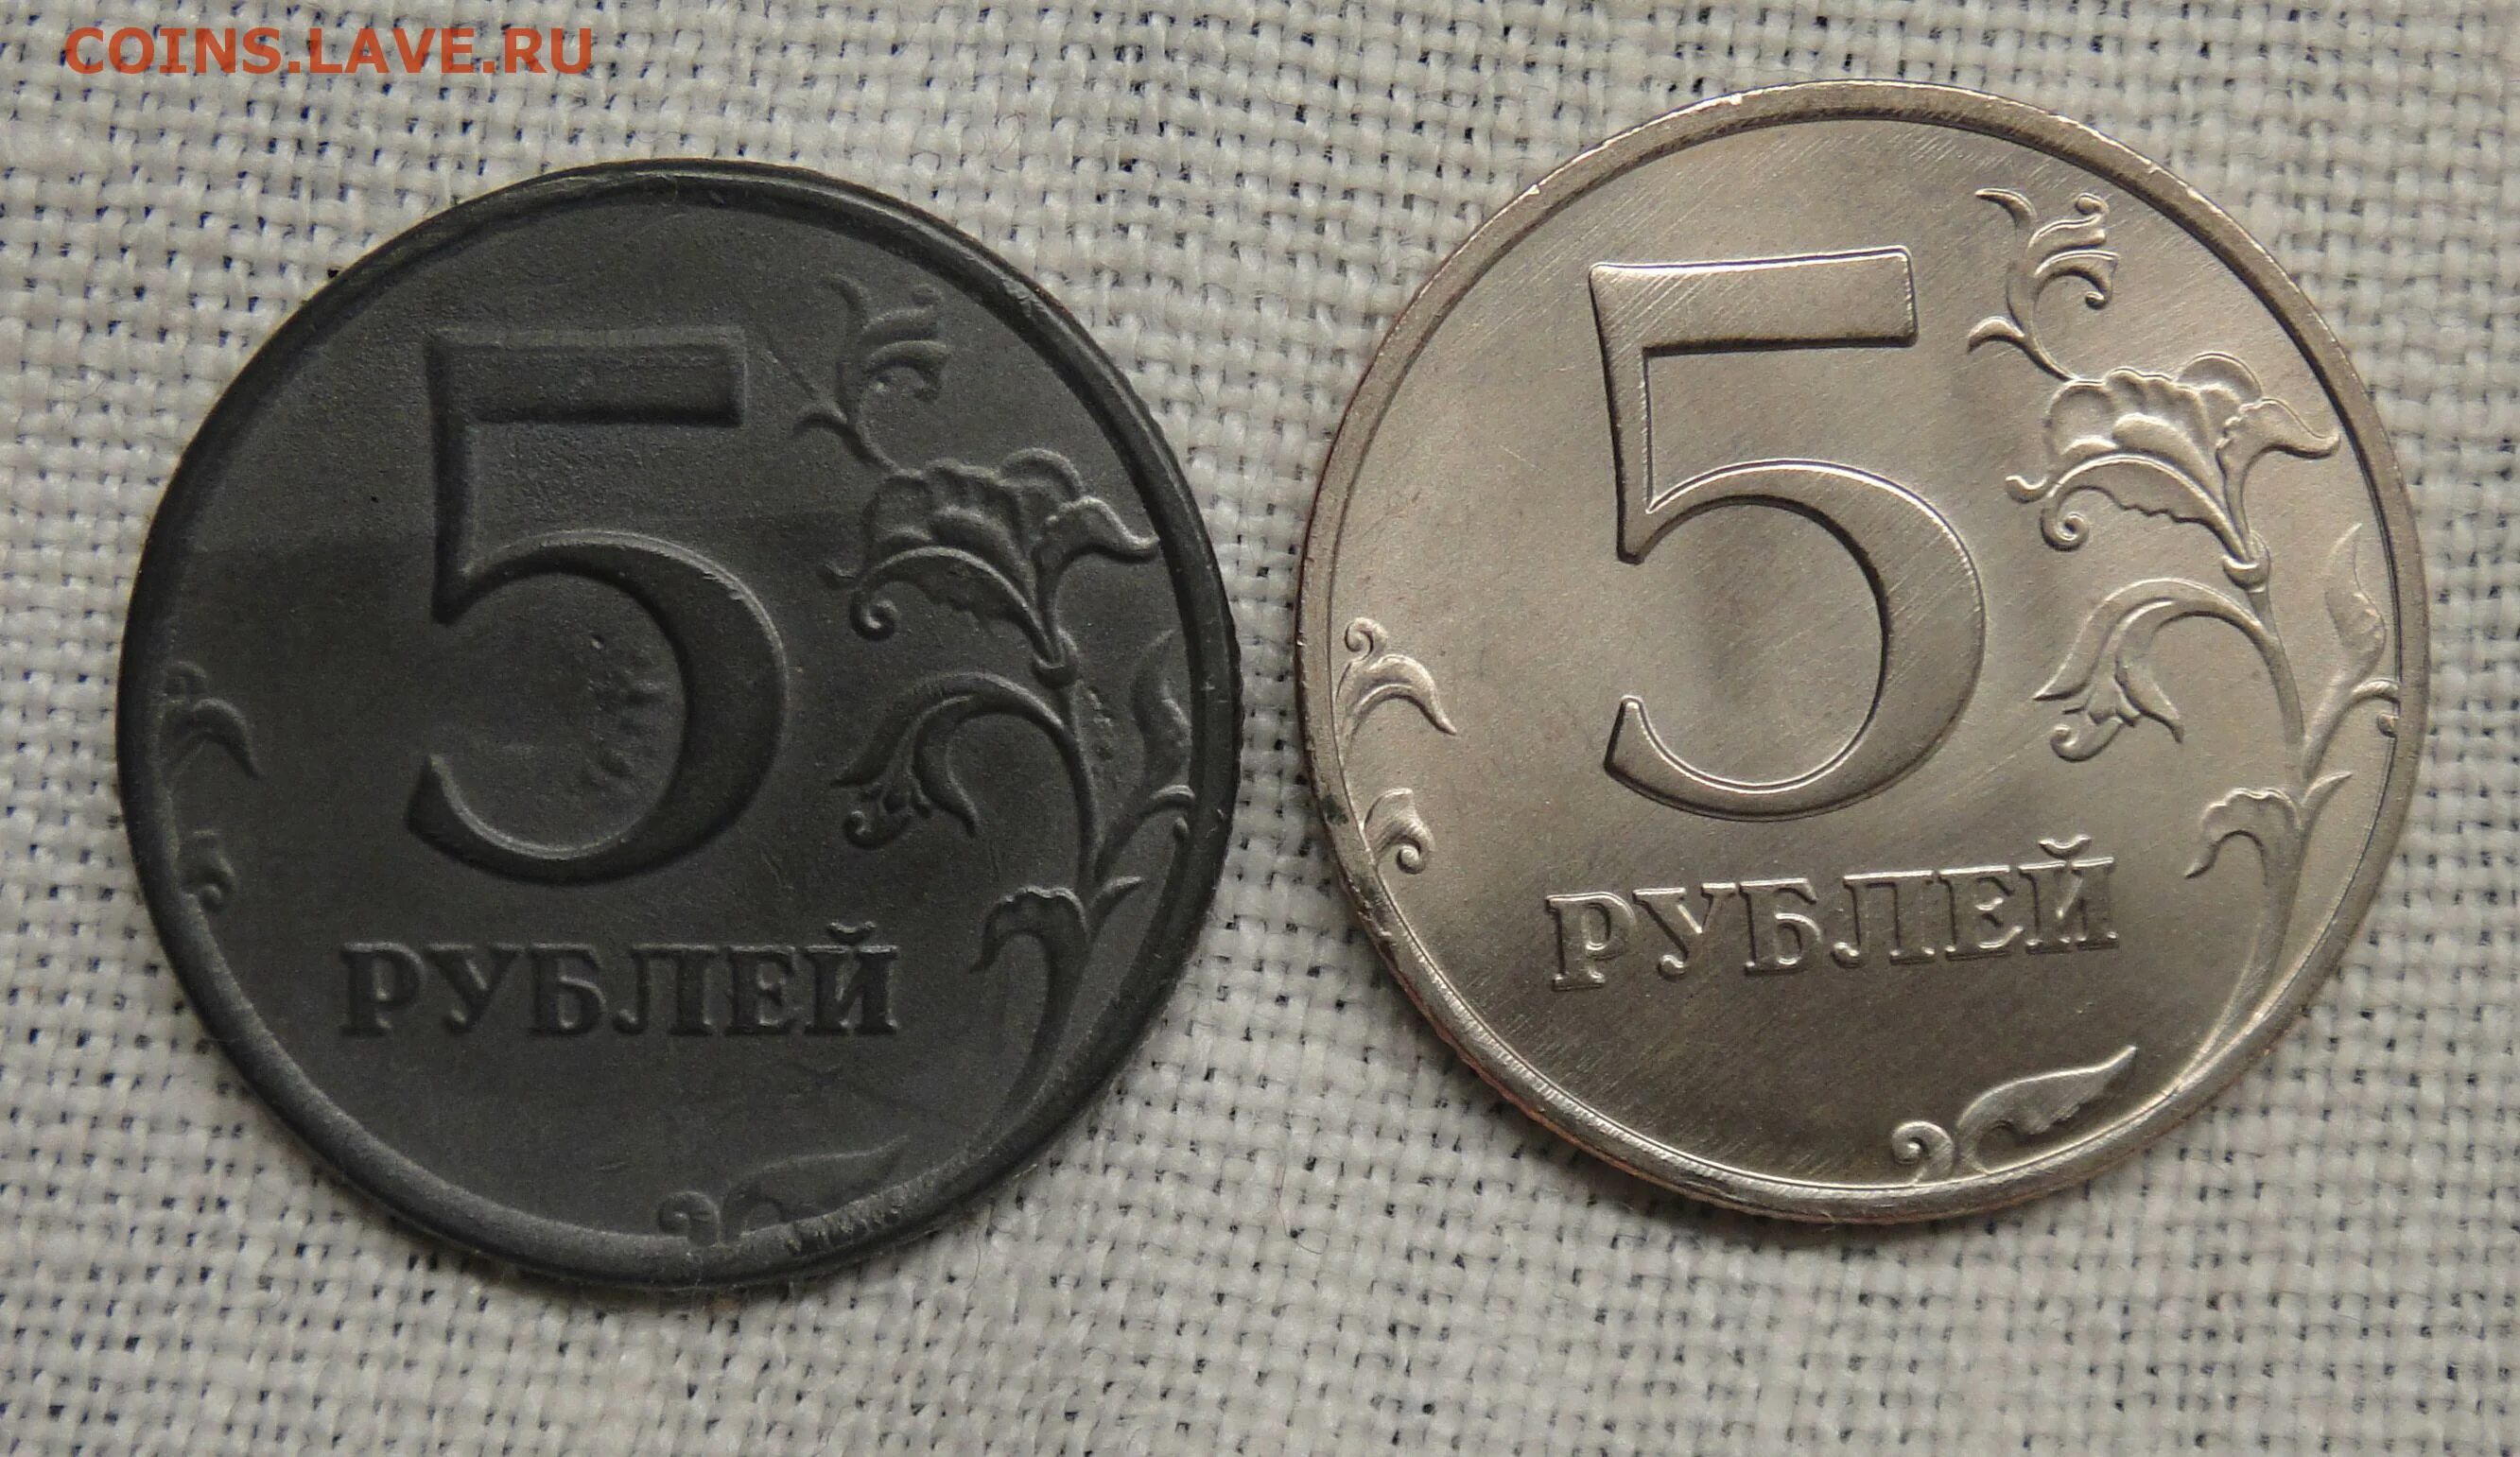 5 рублей новгород 1997. Фальшивые 5 рублей. 5 Рублей 1997. 5 Руб 1997. Пять рублей 1997 метало.